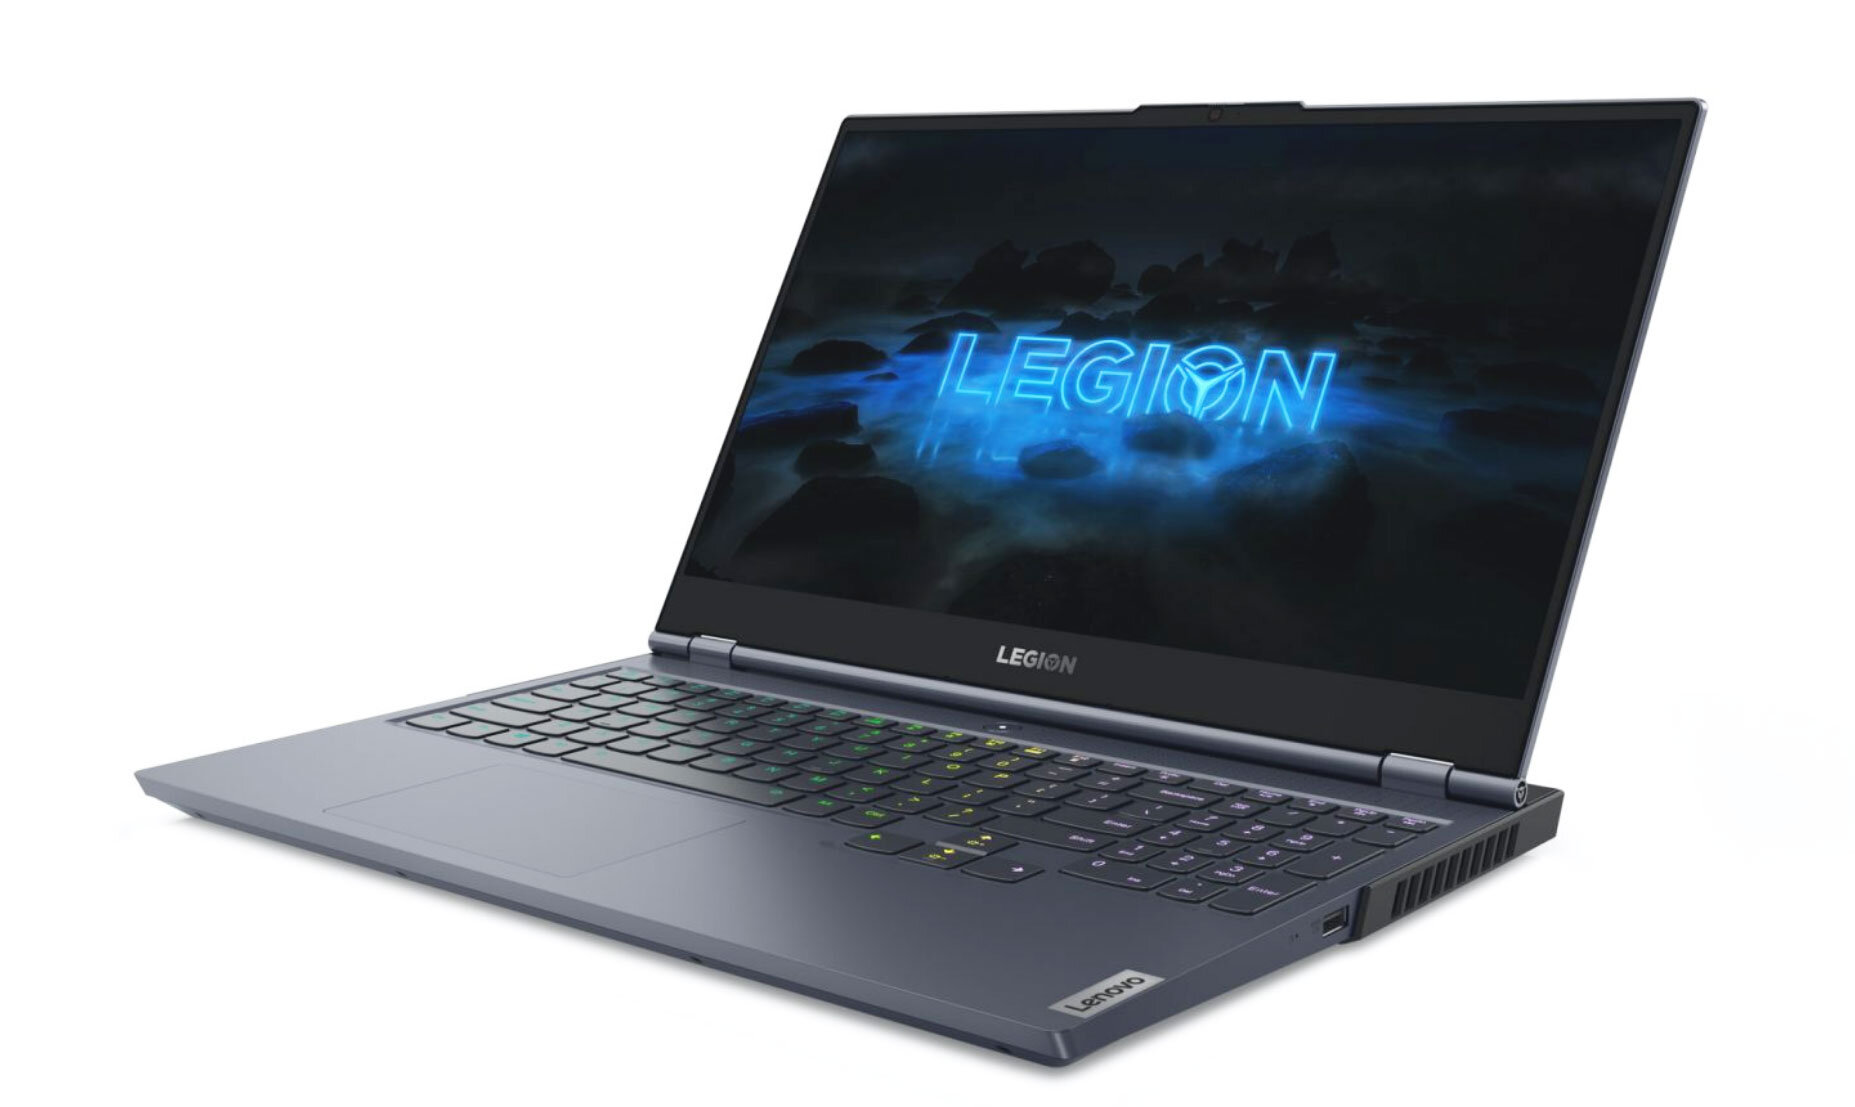 To gaming notebook Lenovo Legion 7i διαθέτει 10ης γενιάς Core H-series και GeForce RTX 2080 Super